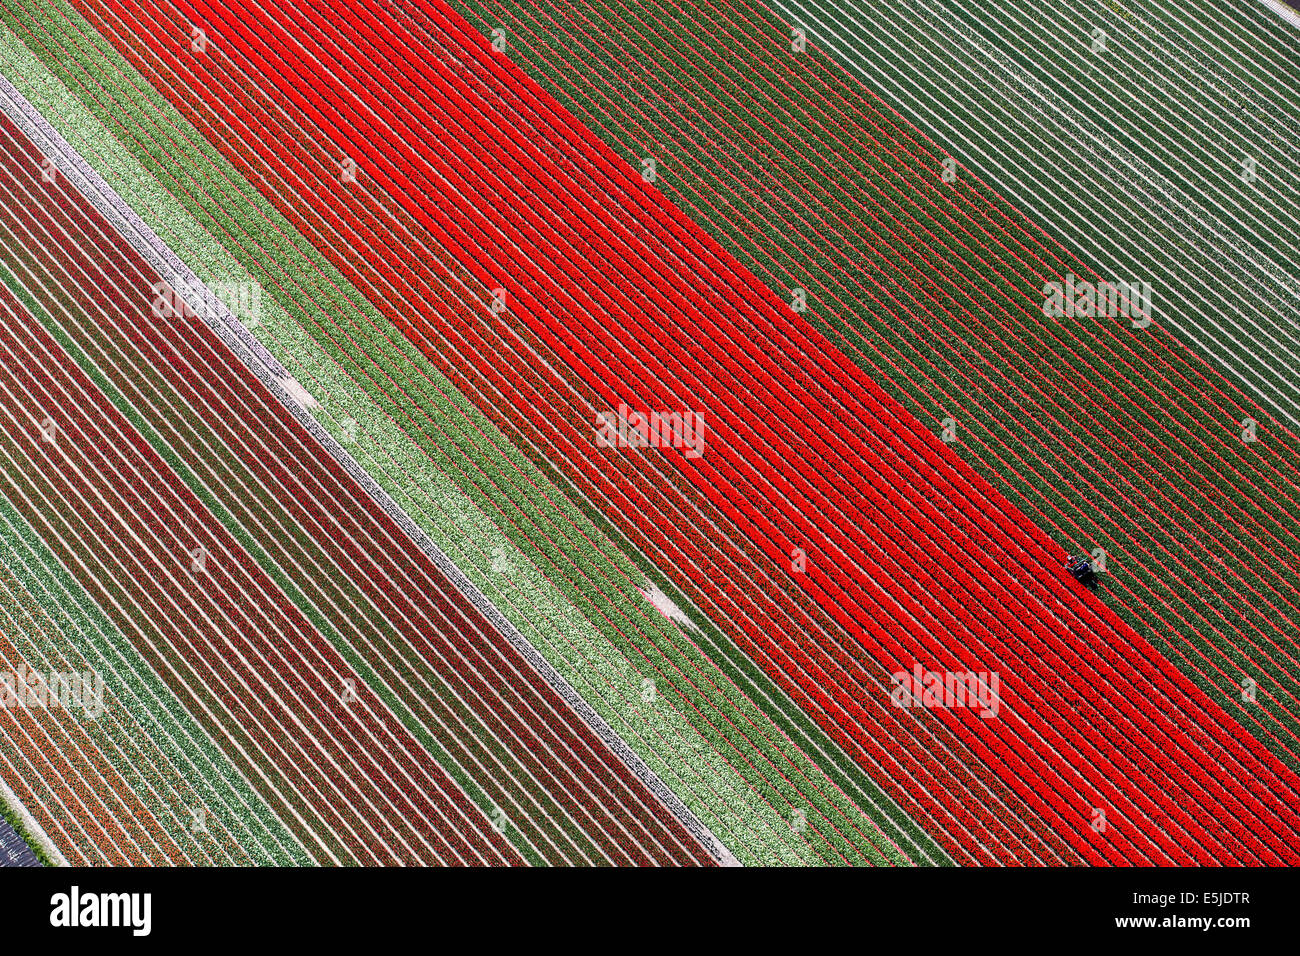 Netherlands, Burgervlotbrug, Tulip fields, Farmer topping tulips. Aerial Stock Photo